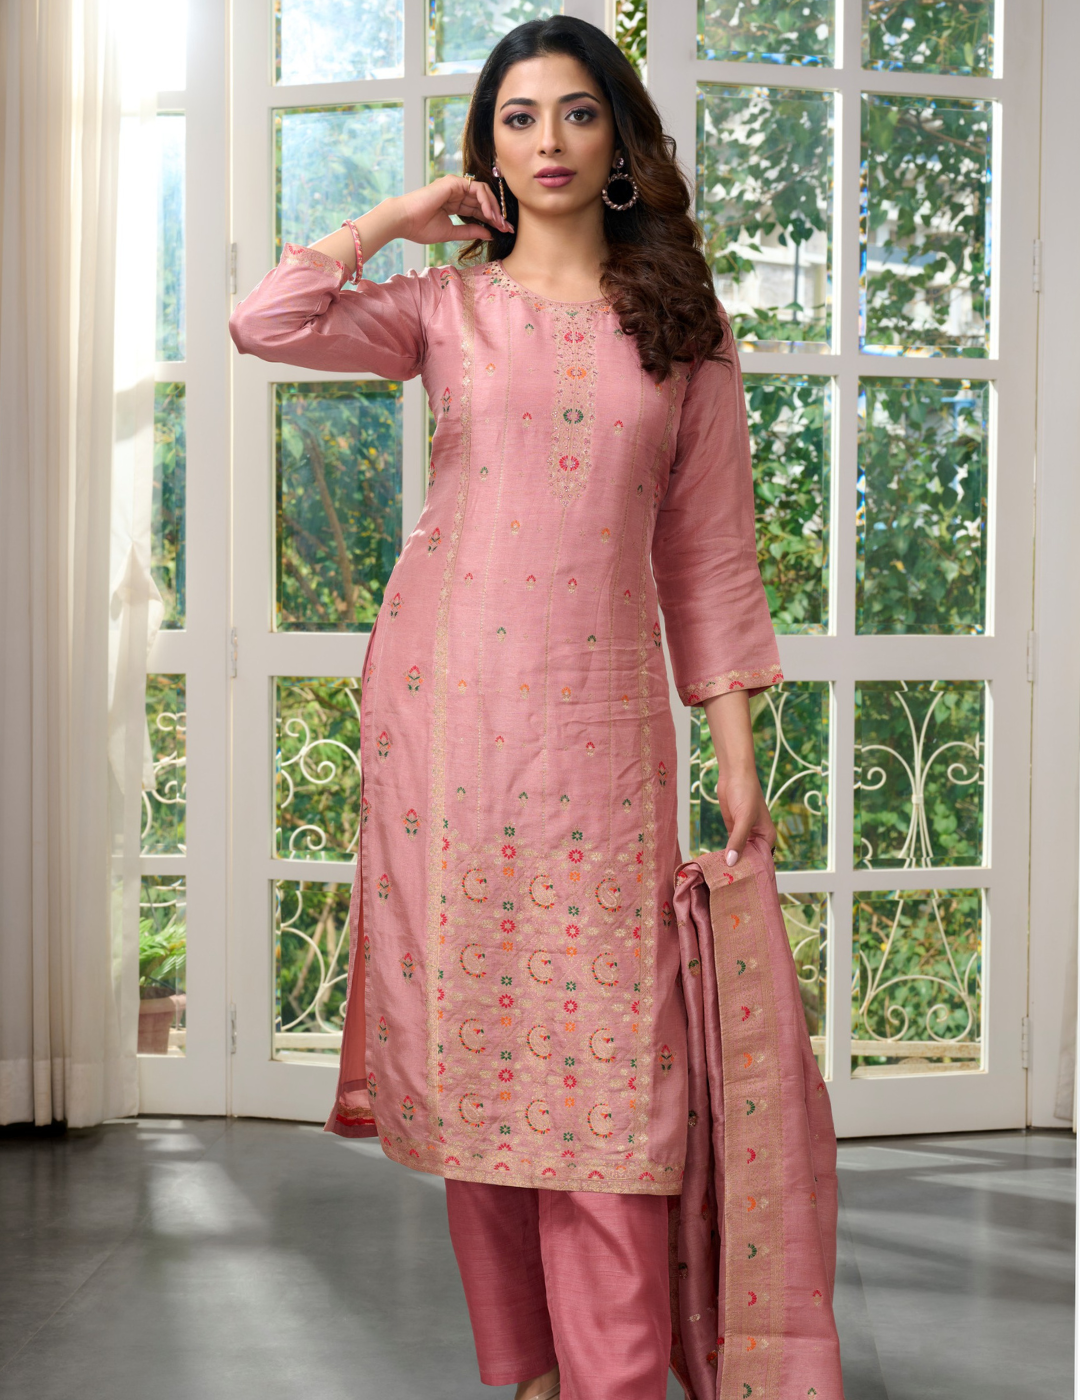 Woven Art Silk Jacquard Pakistani Suit in Pink